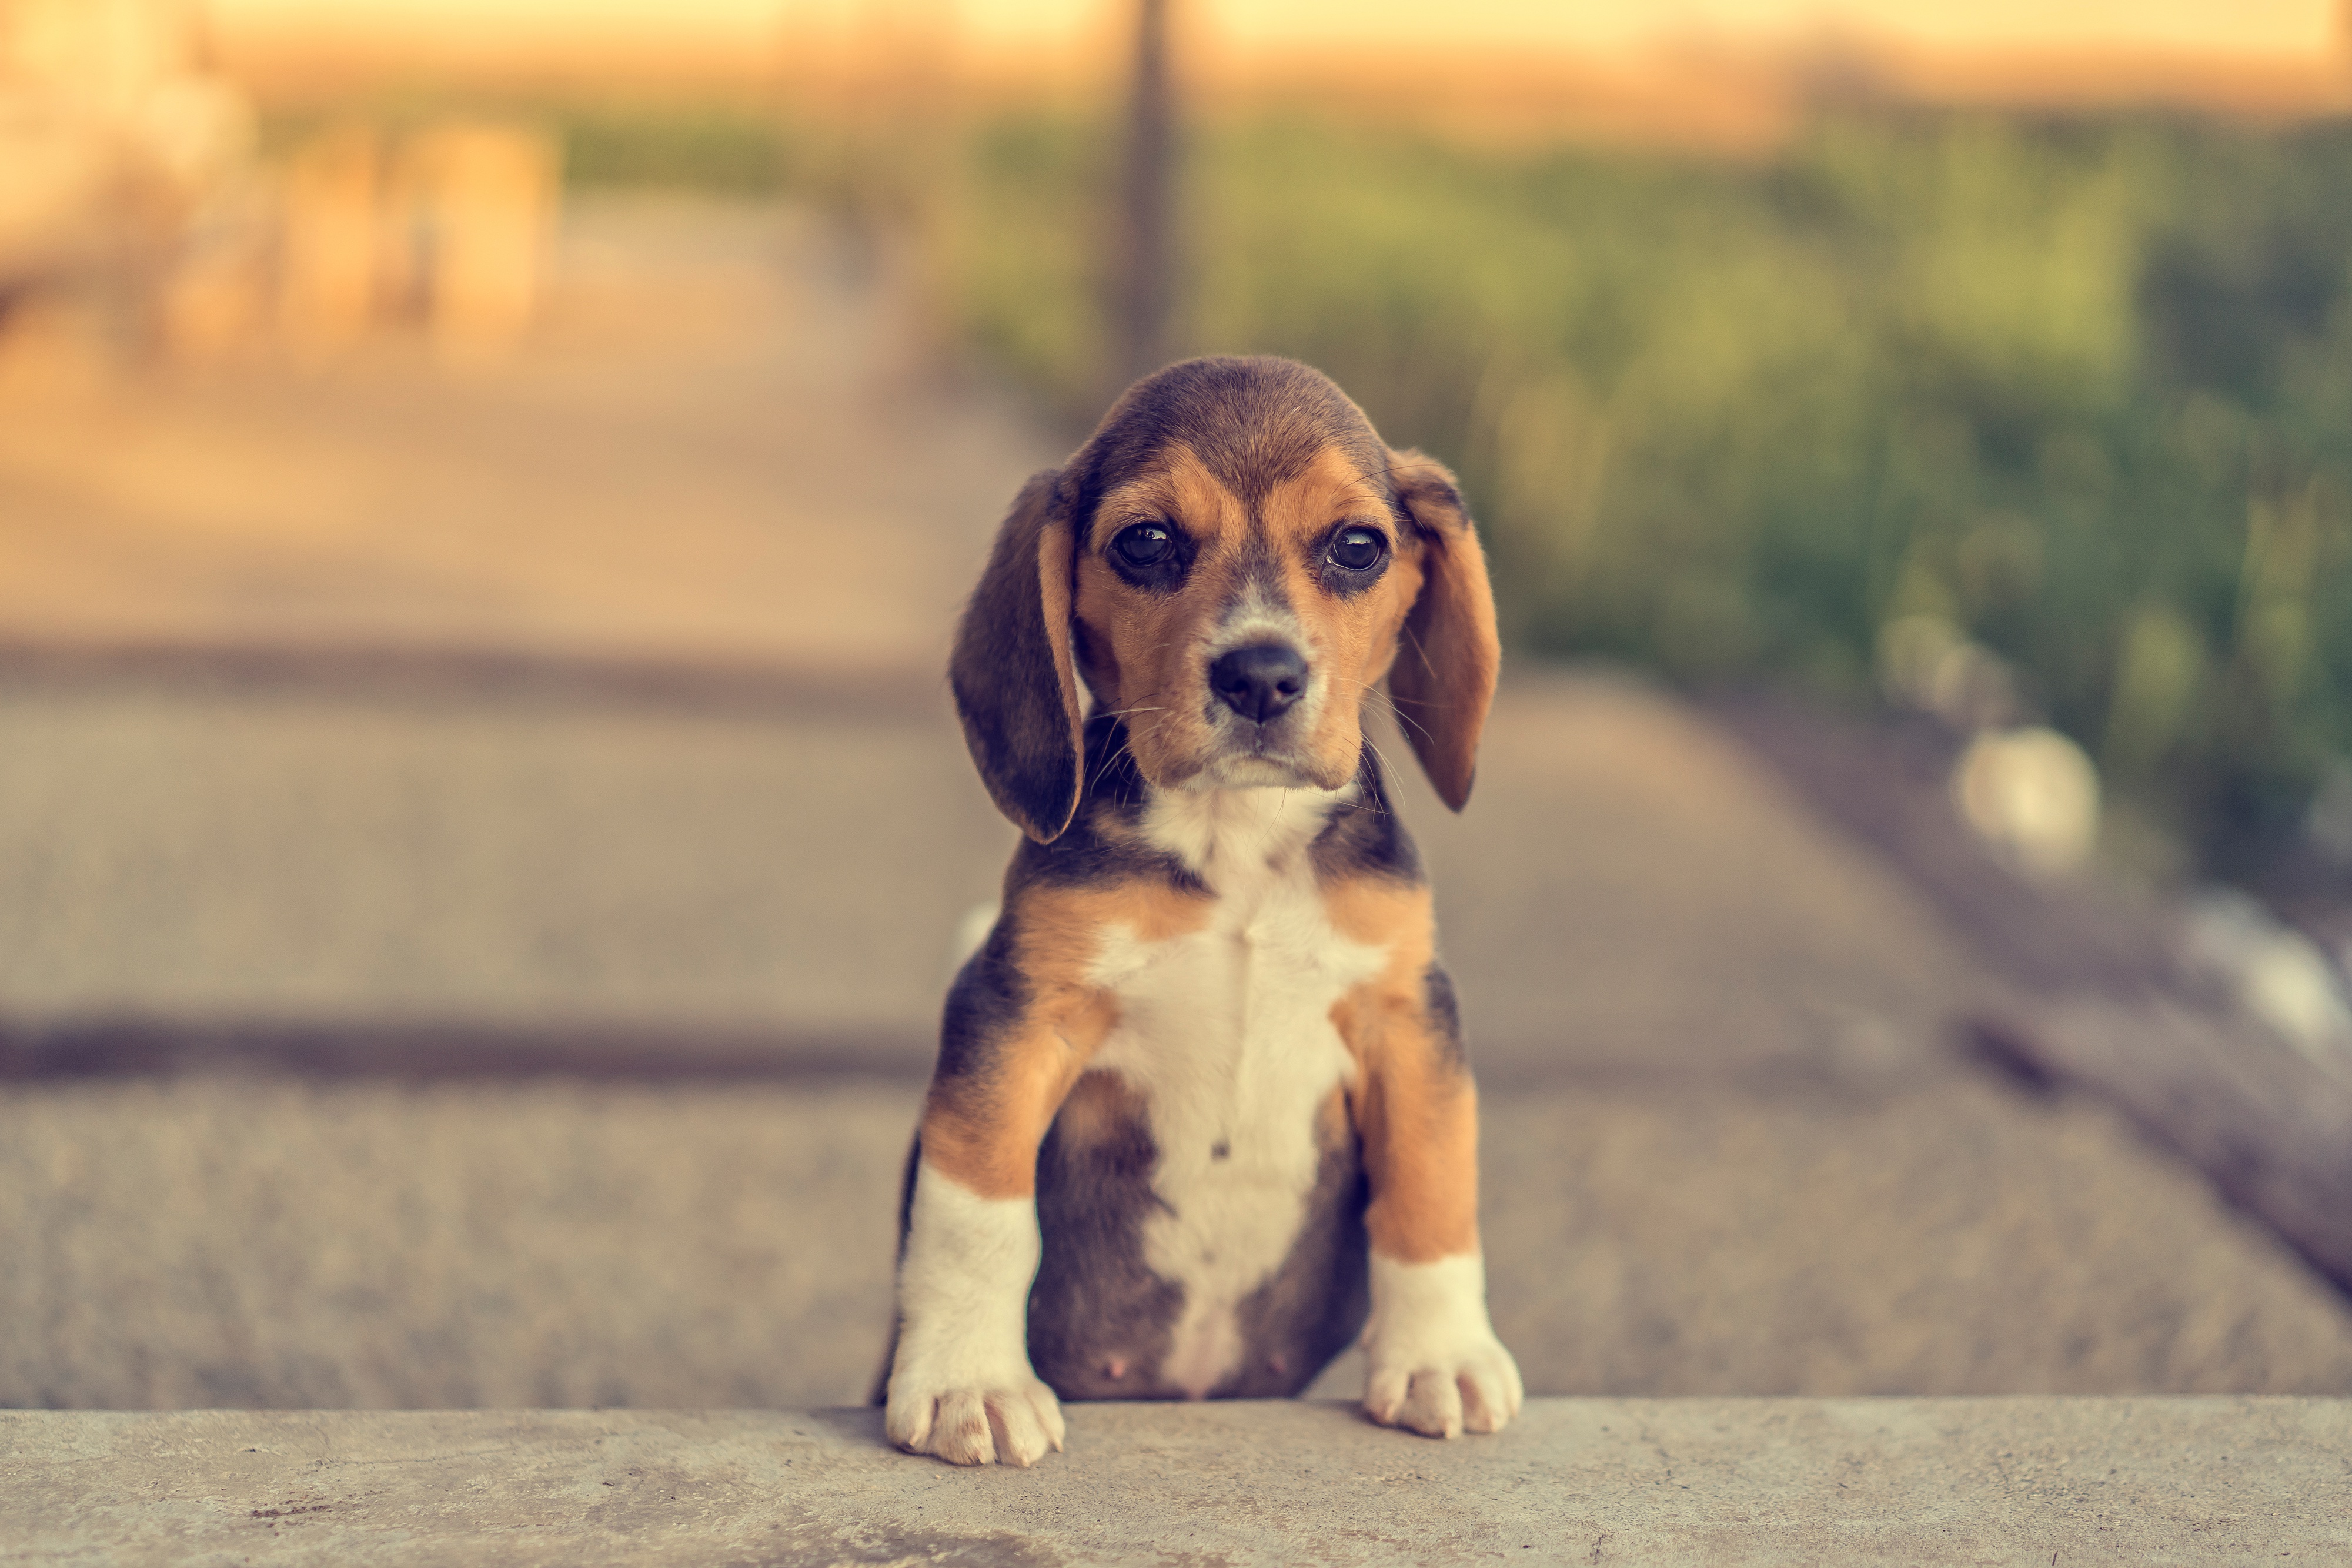 Baby Animal Beagle Dog Pet Puppy 4000x2667